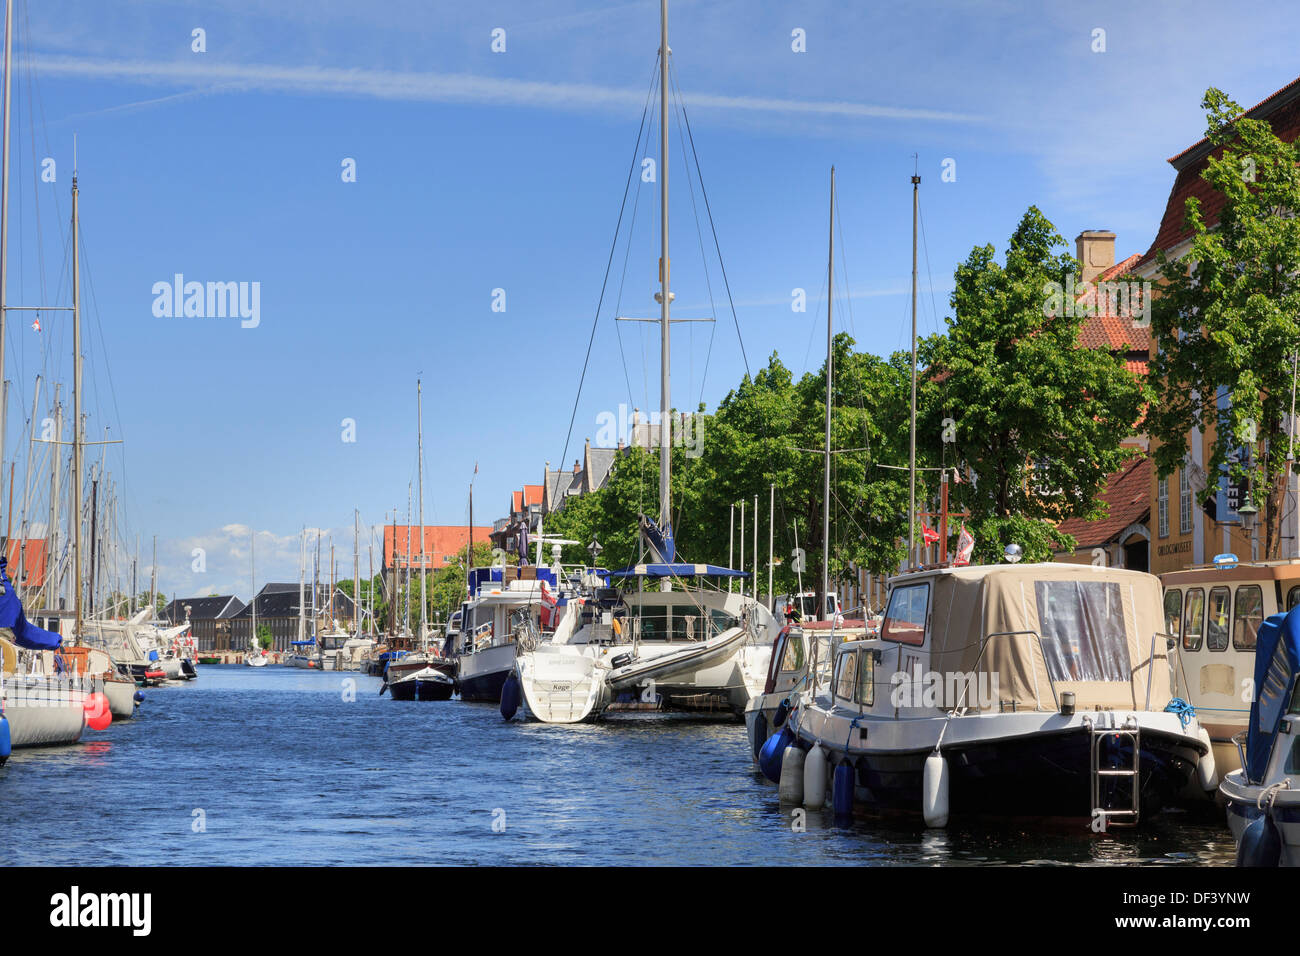 Moored yachts, boats and leisurecraft on Christianshavns Kanal, Overgaden, Christianshavn, Copenhagen, Zealand, Denmark Stock Photo